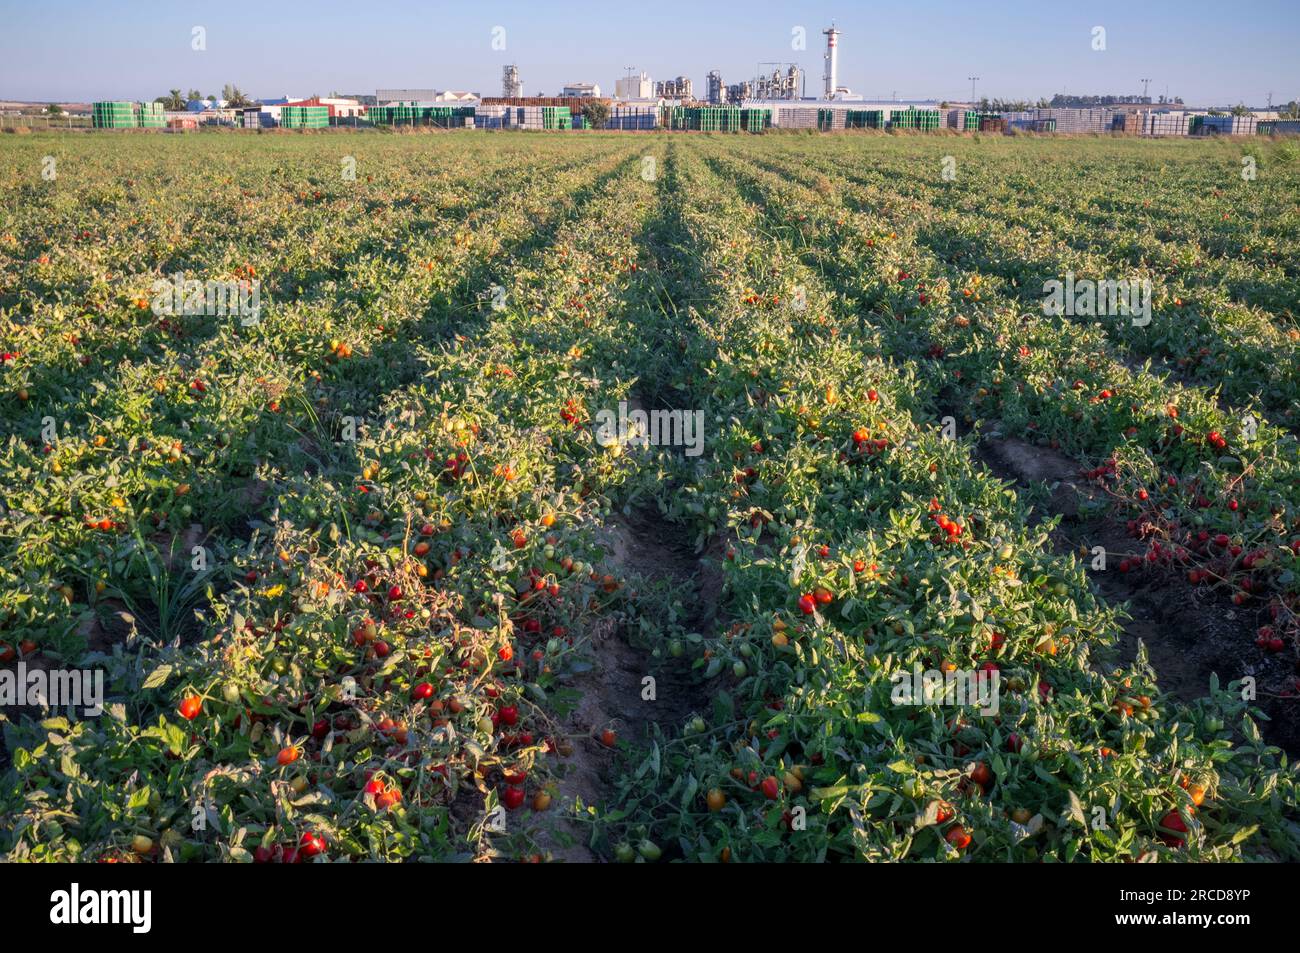 Tomatenplantagen mit Tomatenfabrik am Boden Stockfoto